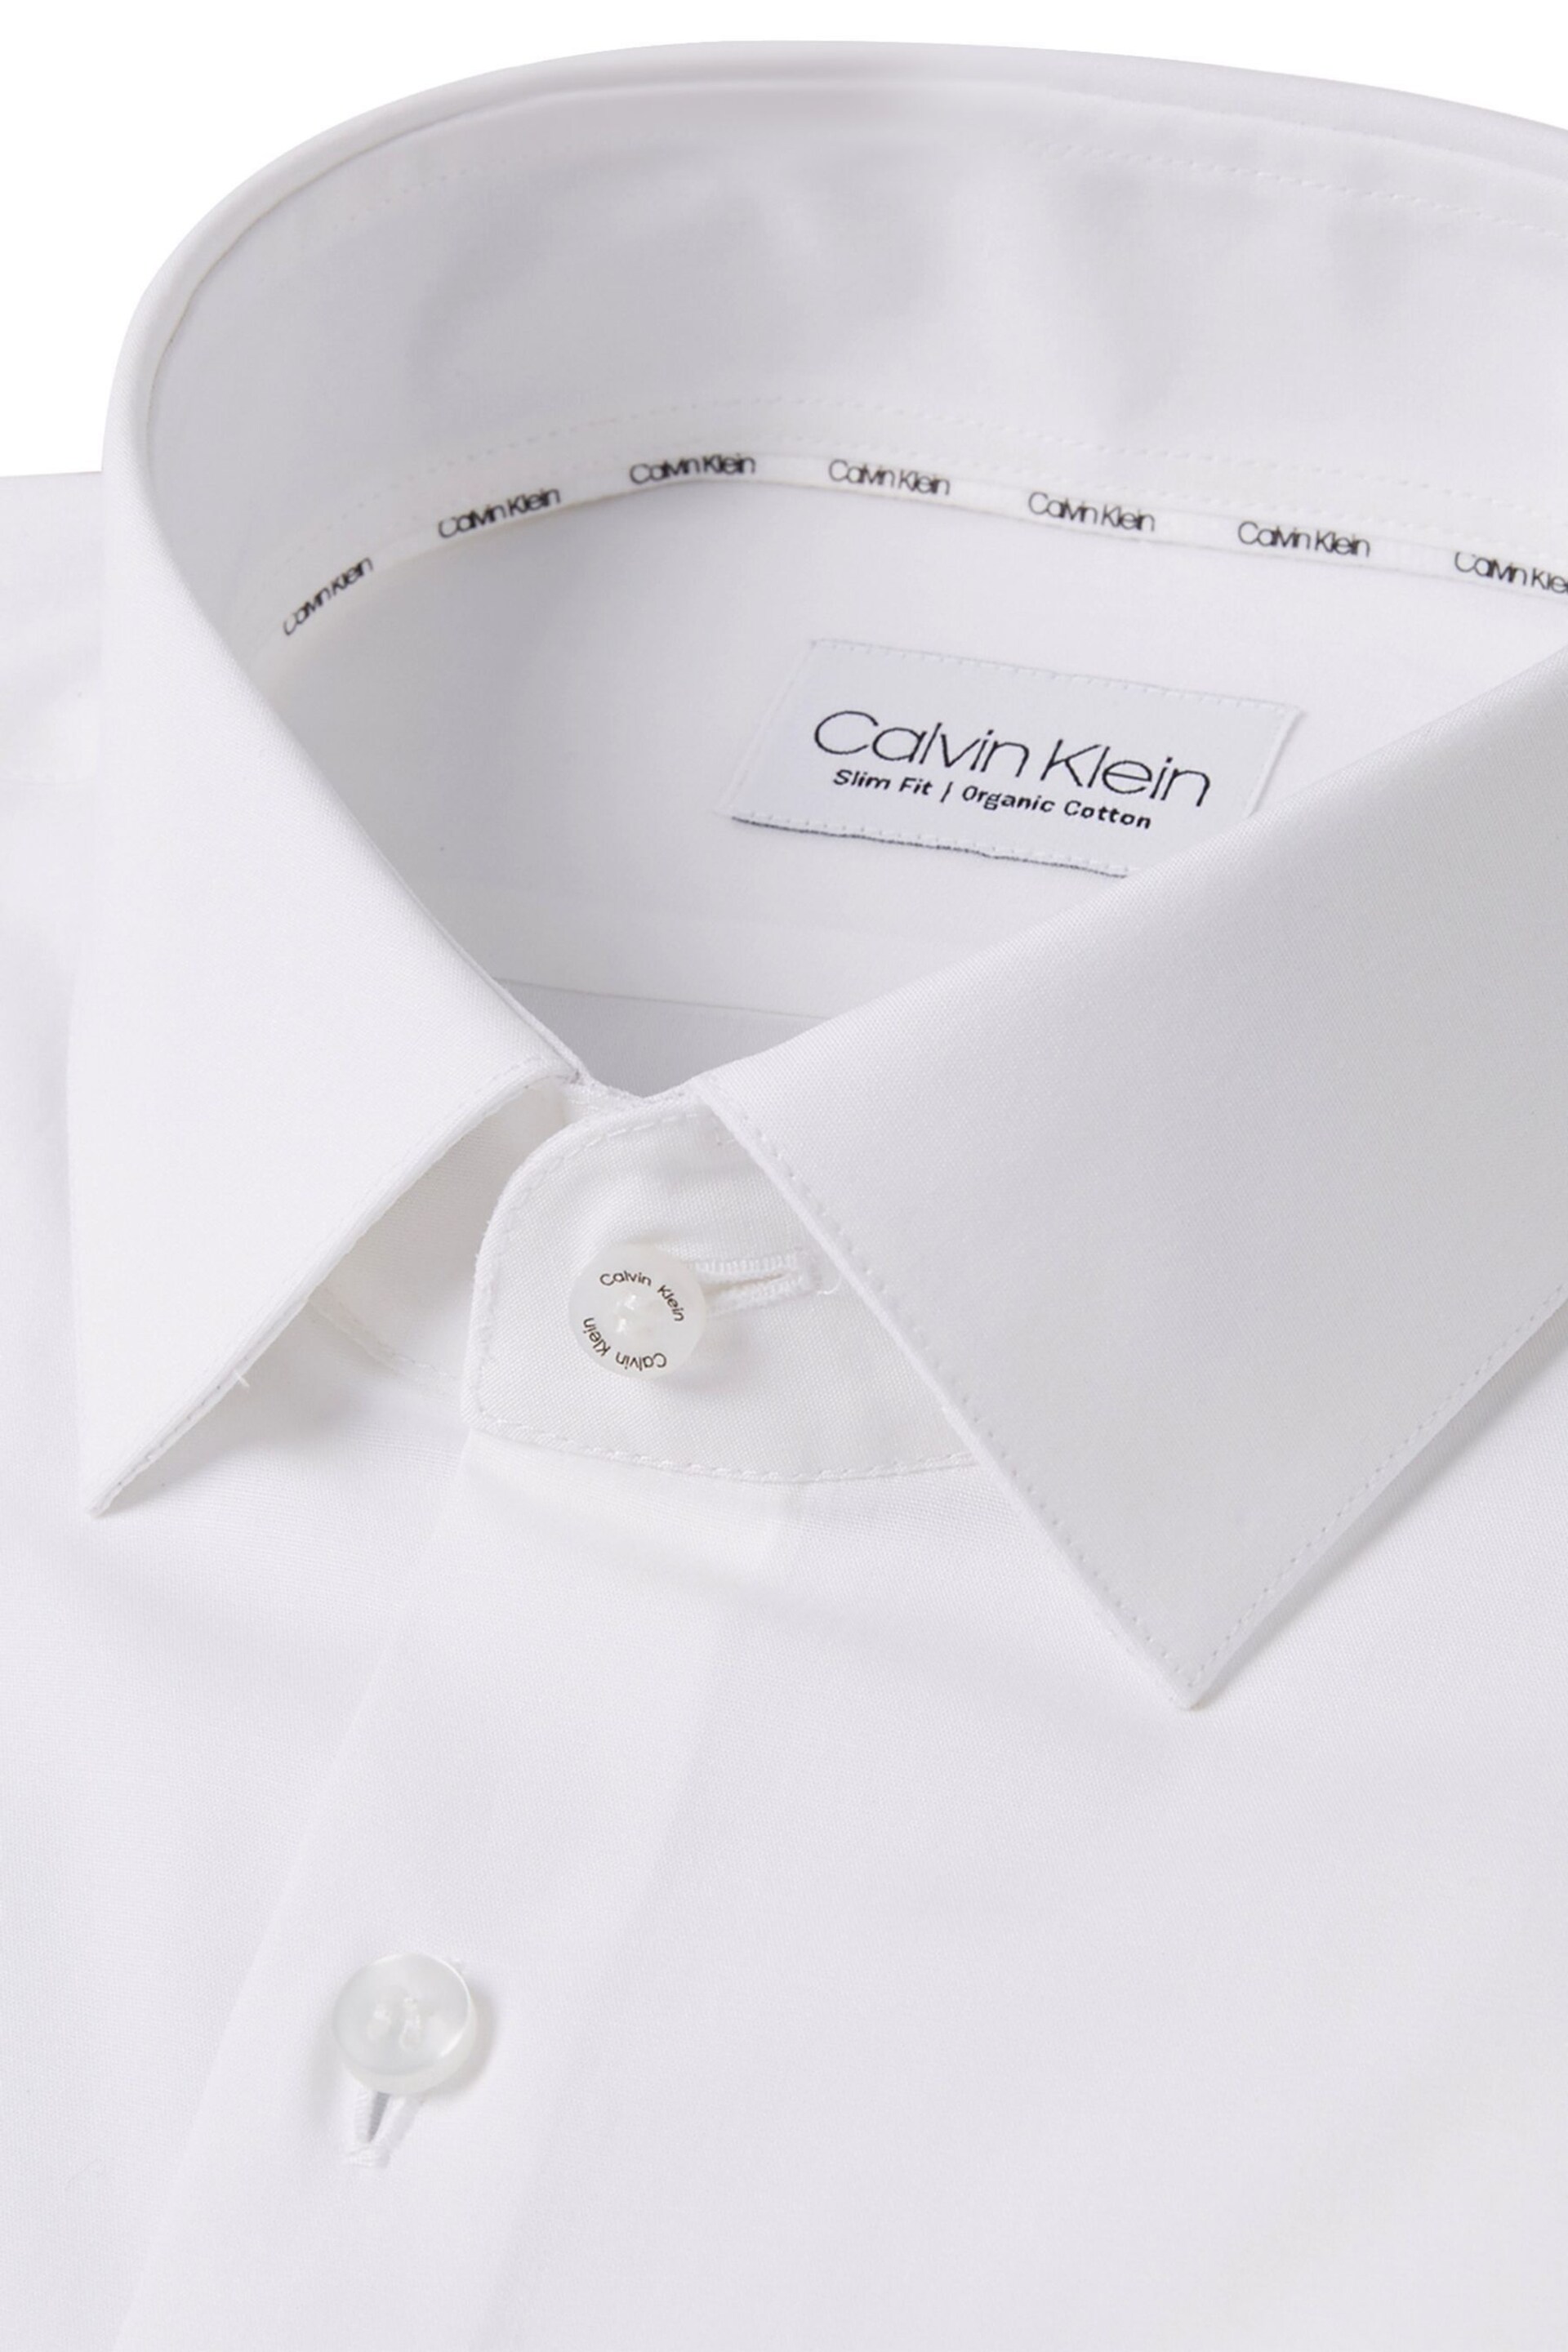 Calvin Klein White Slim Fit Poplin Stretch Shirt - Image 5 of 5